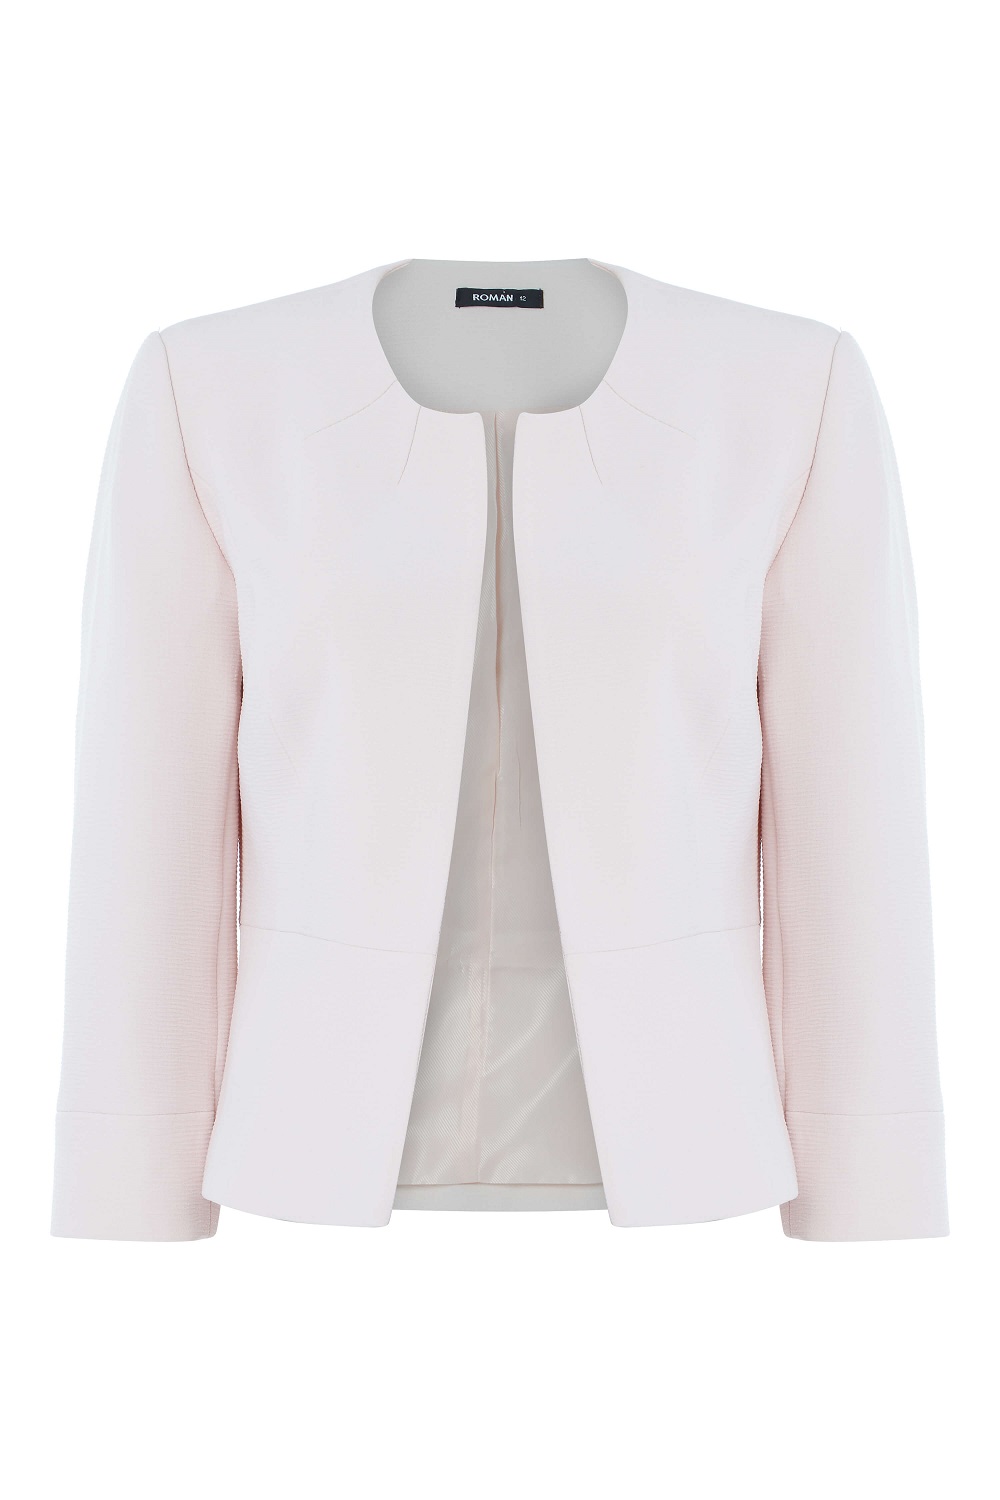 Light Pink Tailored Jacquard Jacket, Image 5 of 5